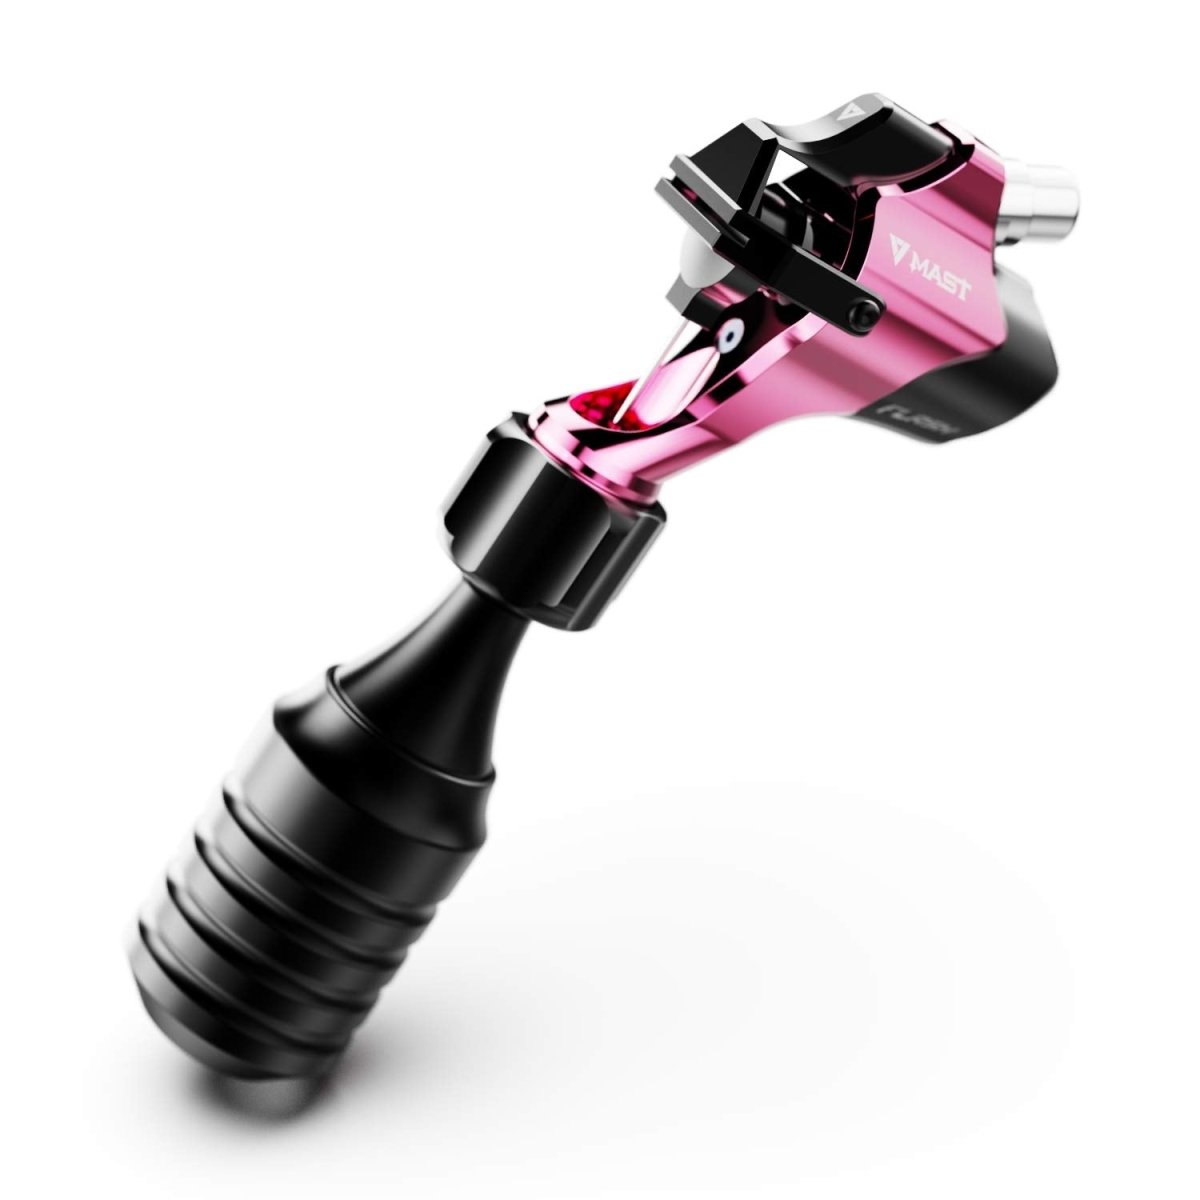 Mast Flash Rotary Tattoo Machine Lightweight Direct Drive - Pink - Tattoo Unleashed